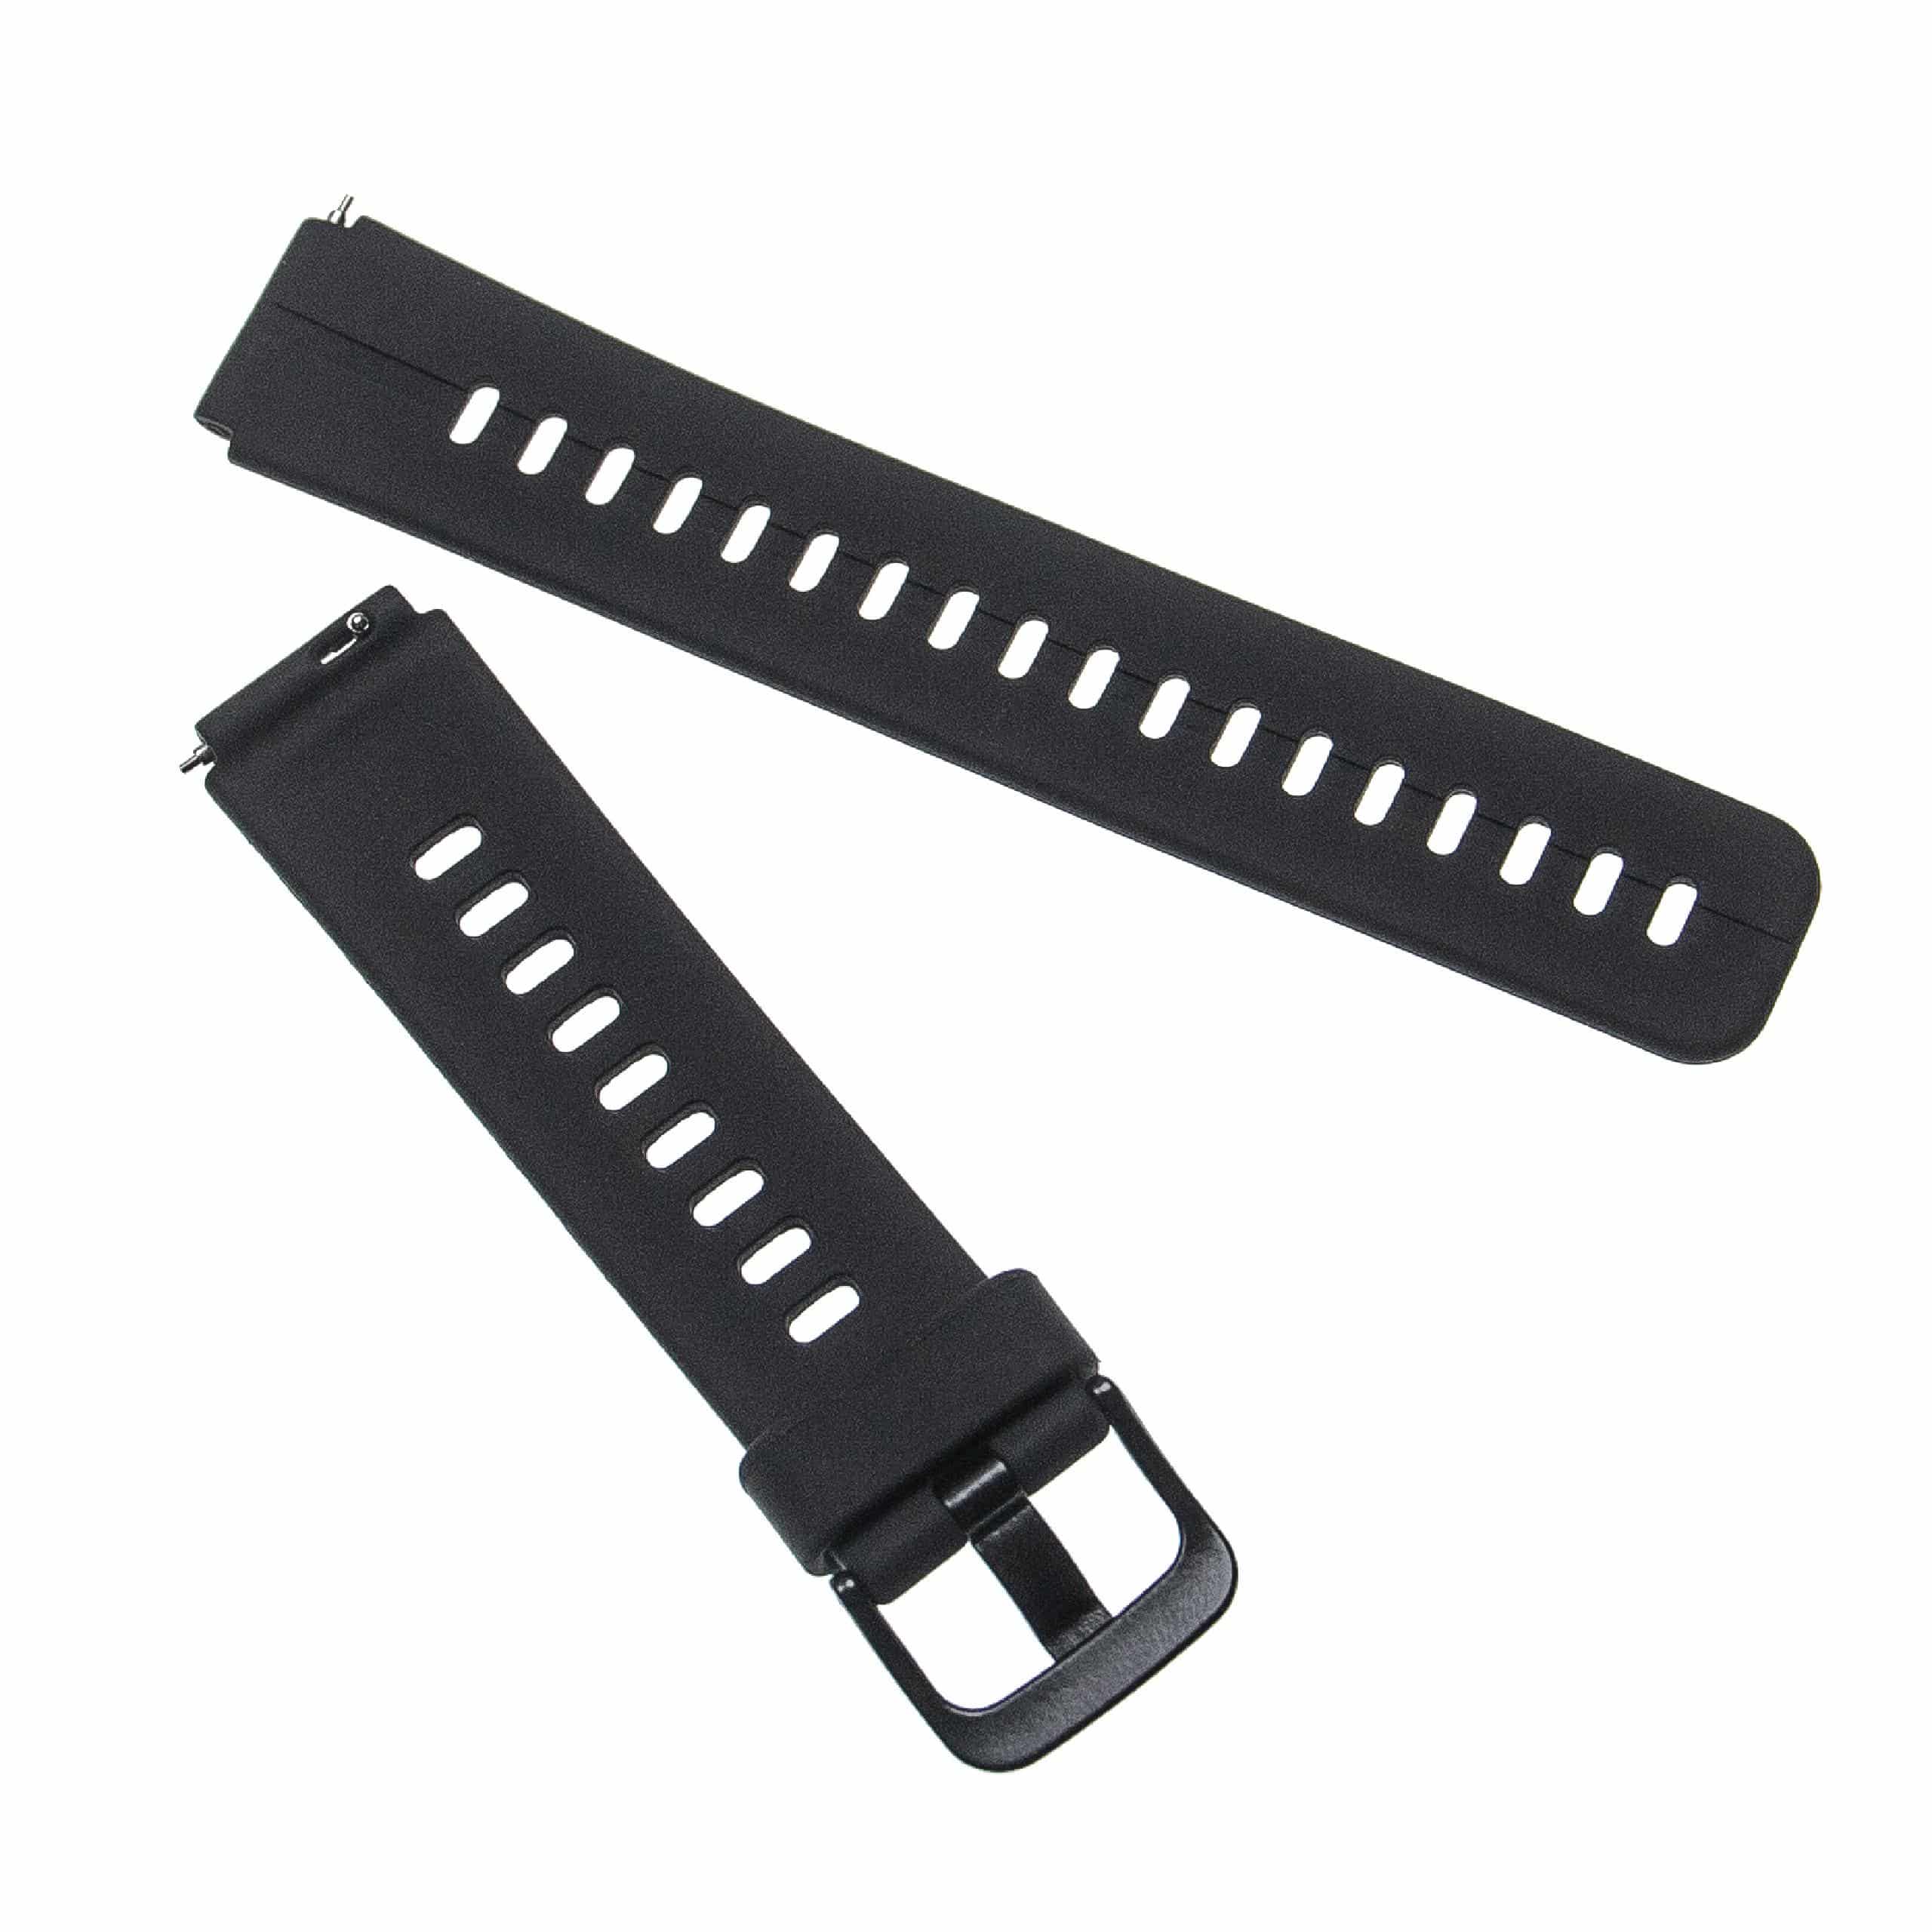 Armband für Huawei Smartwatch - 11,2 + 8,8 cm lang, 16mm breit, Silikon, schwarz